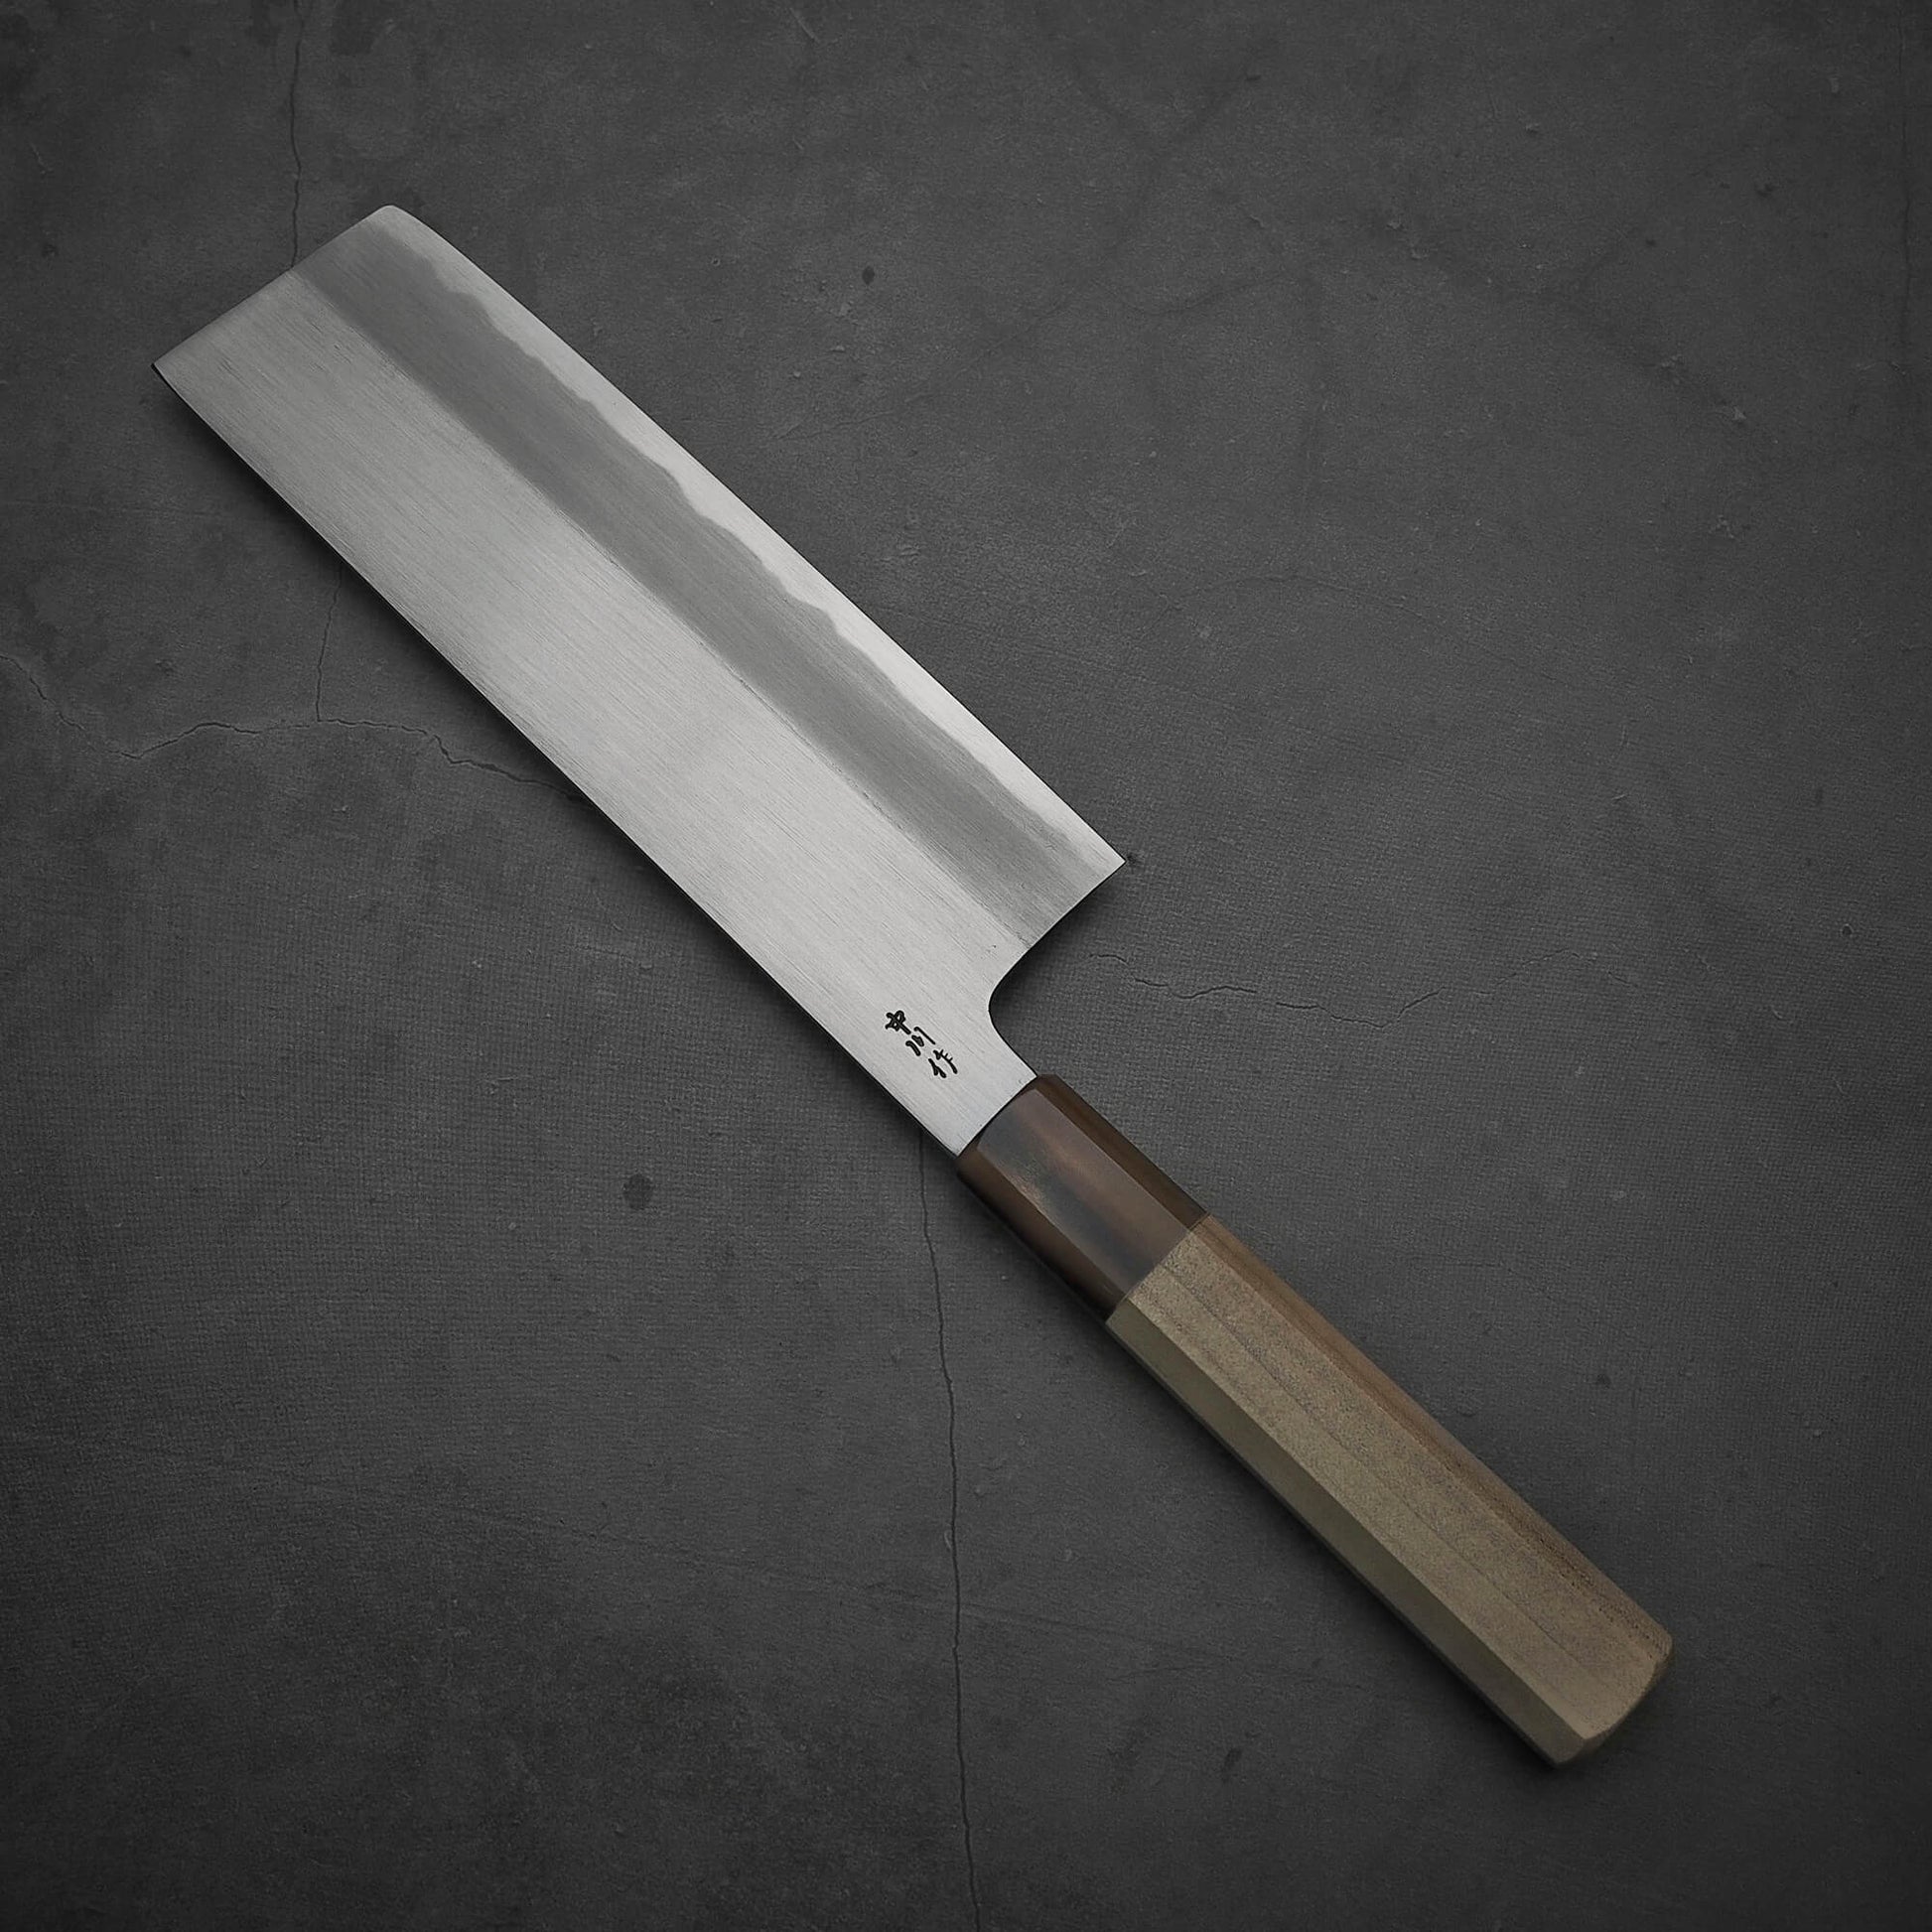 Top view of the Nakagawa shinogi aogami#2 nakiri knife where the tip part is facing towards the upper left